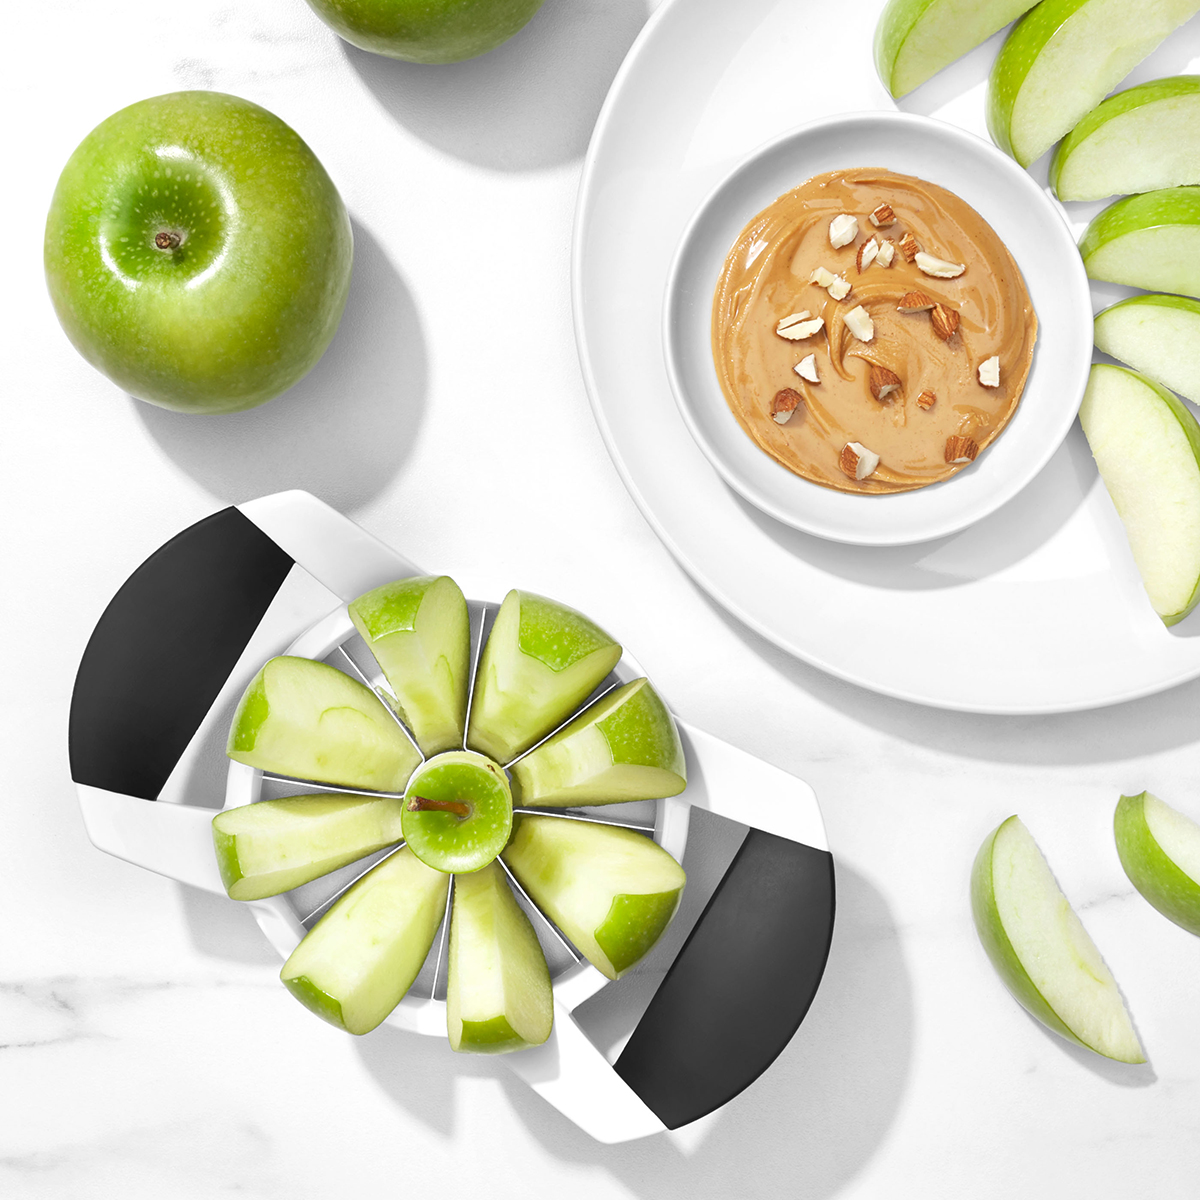 Kitchen Accessories - Oxo Good Grips Apple Corer/Slicer